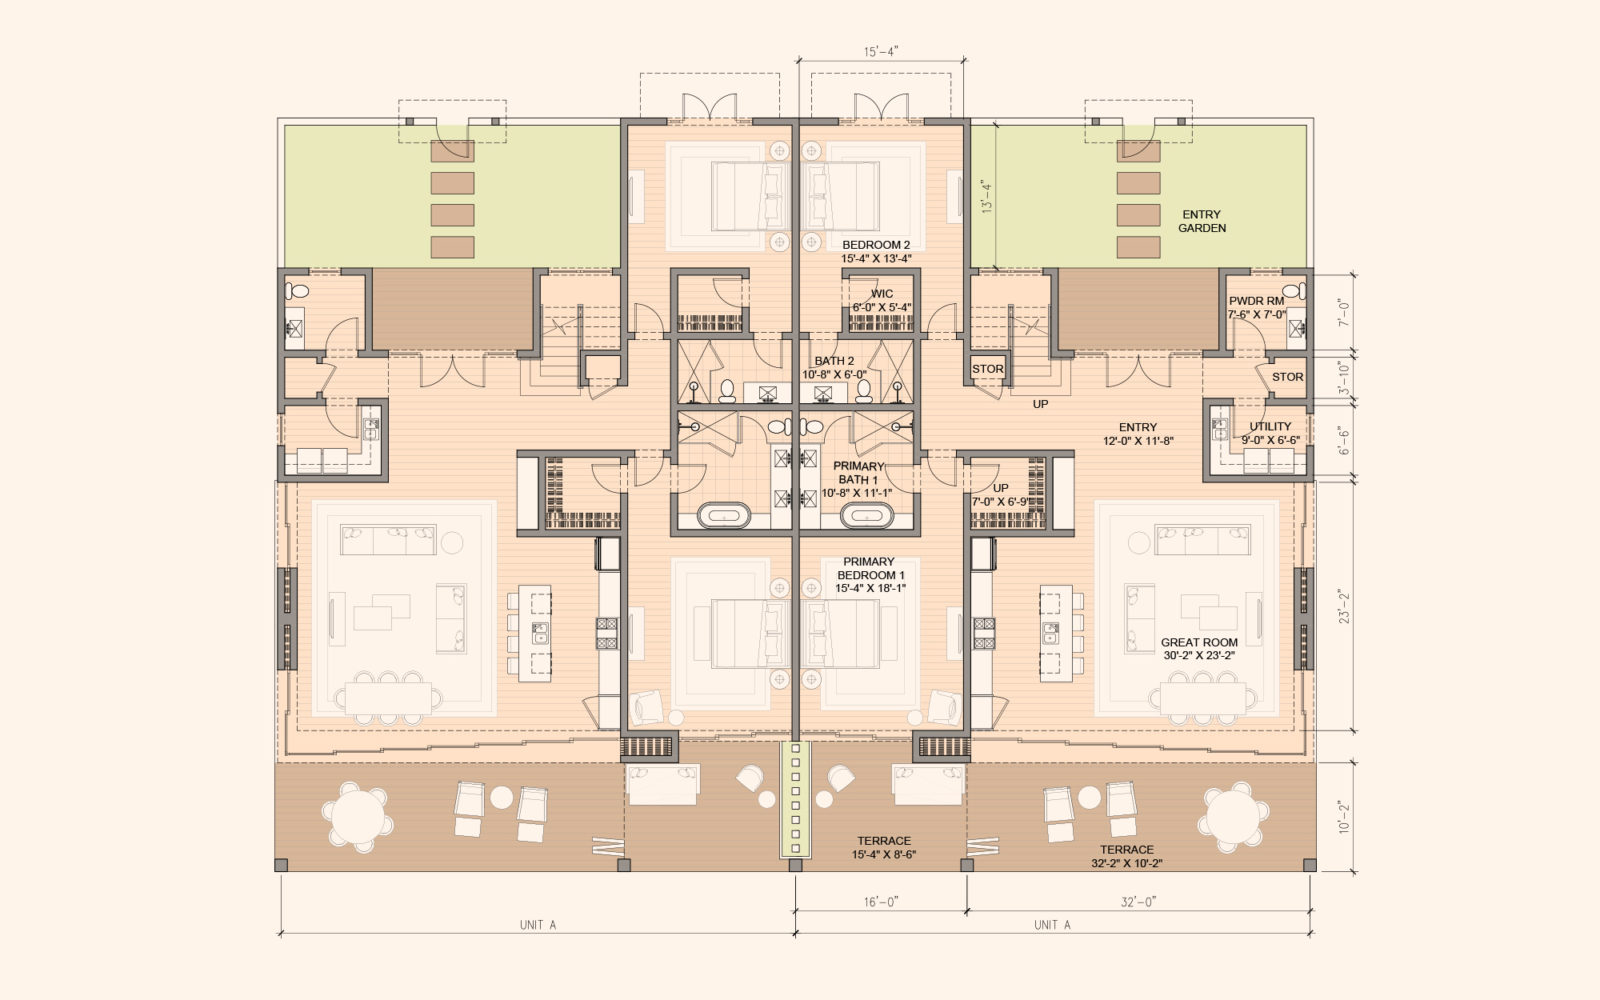 The entry level 5 bedroom floorplan